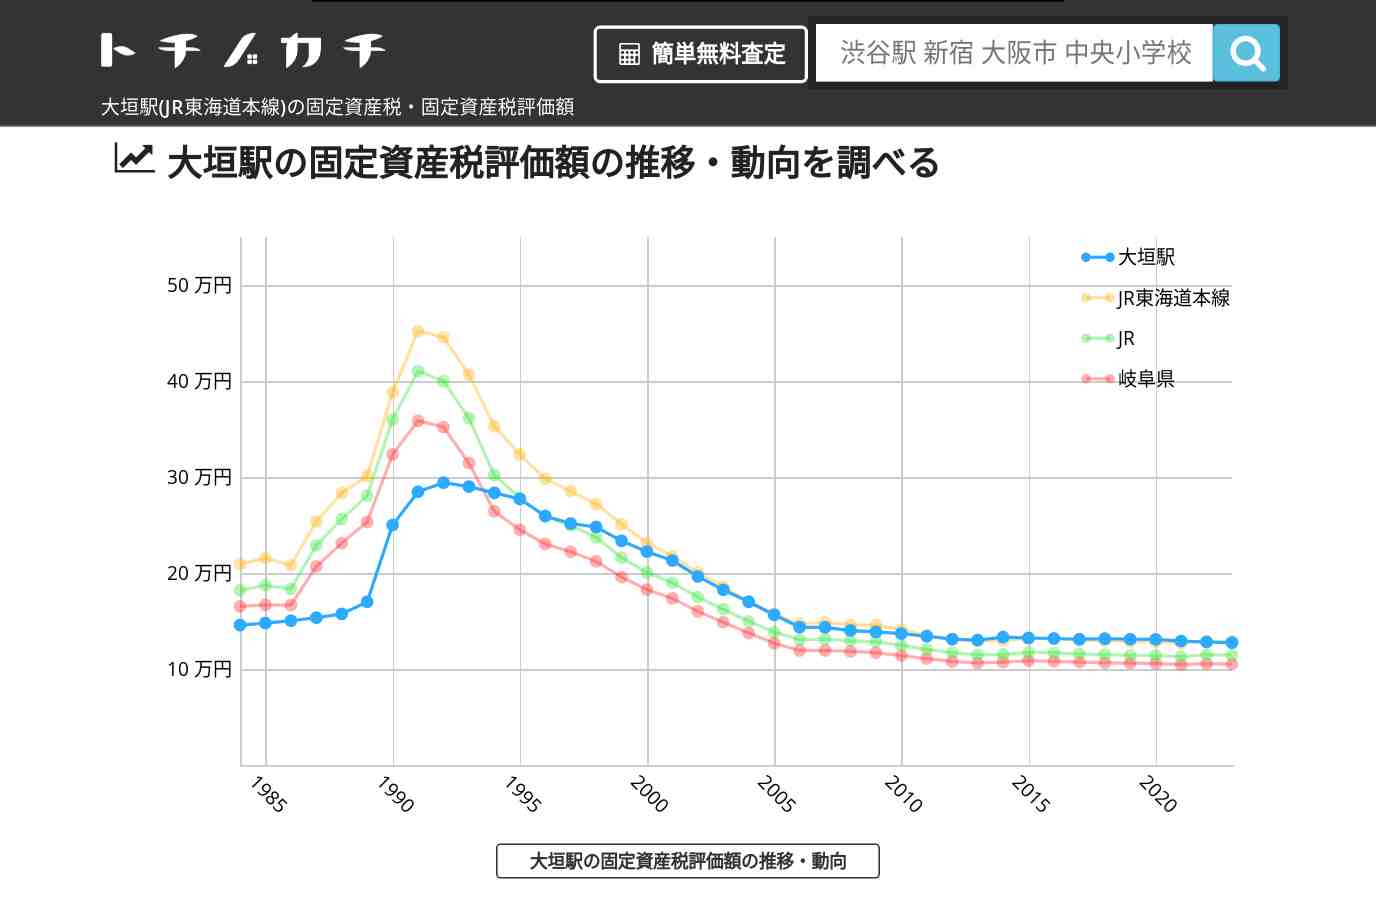 大垣駅(JR東海道本線)の固定資産税・固定資産税評価額 | トチノカチ